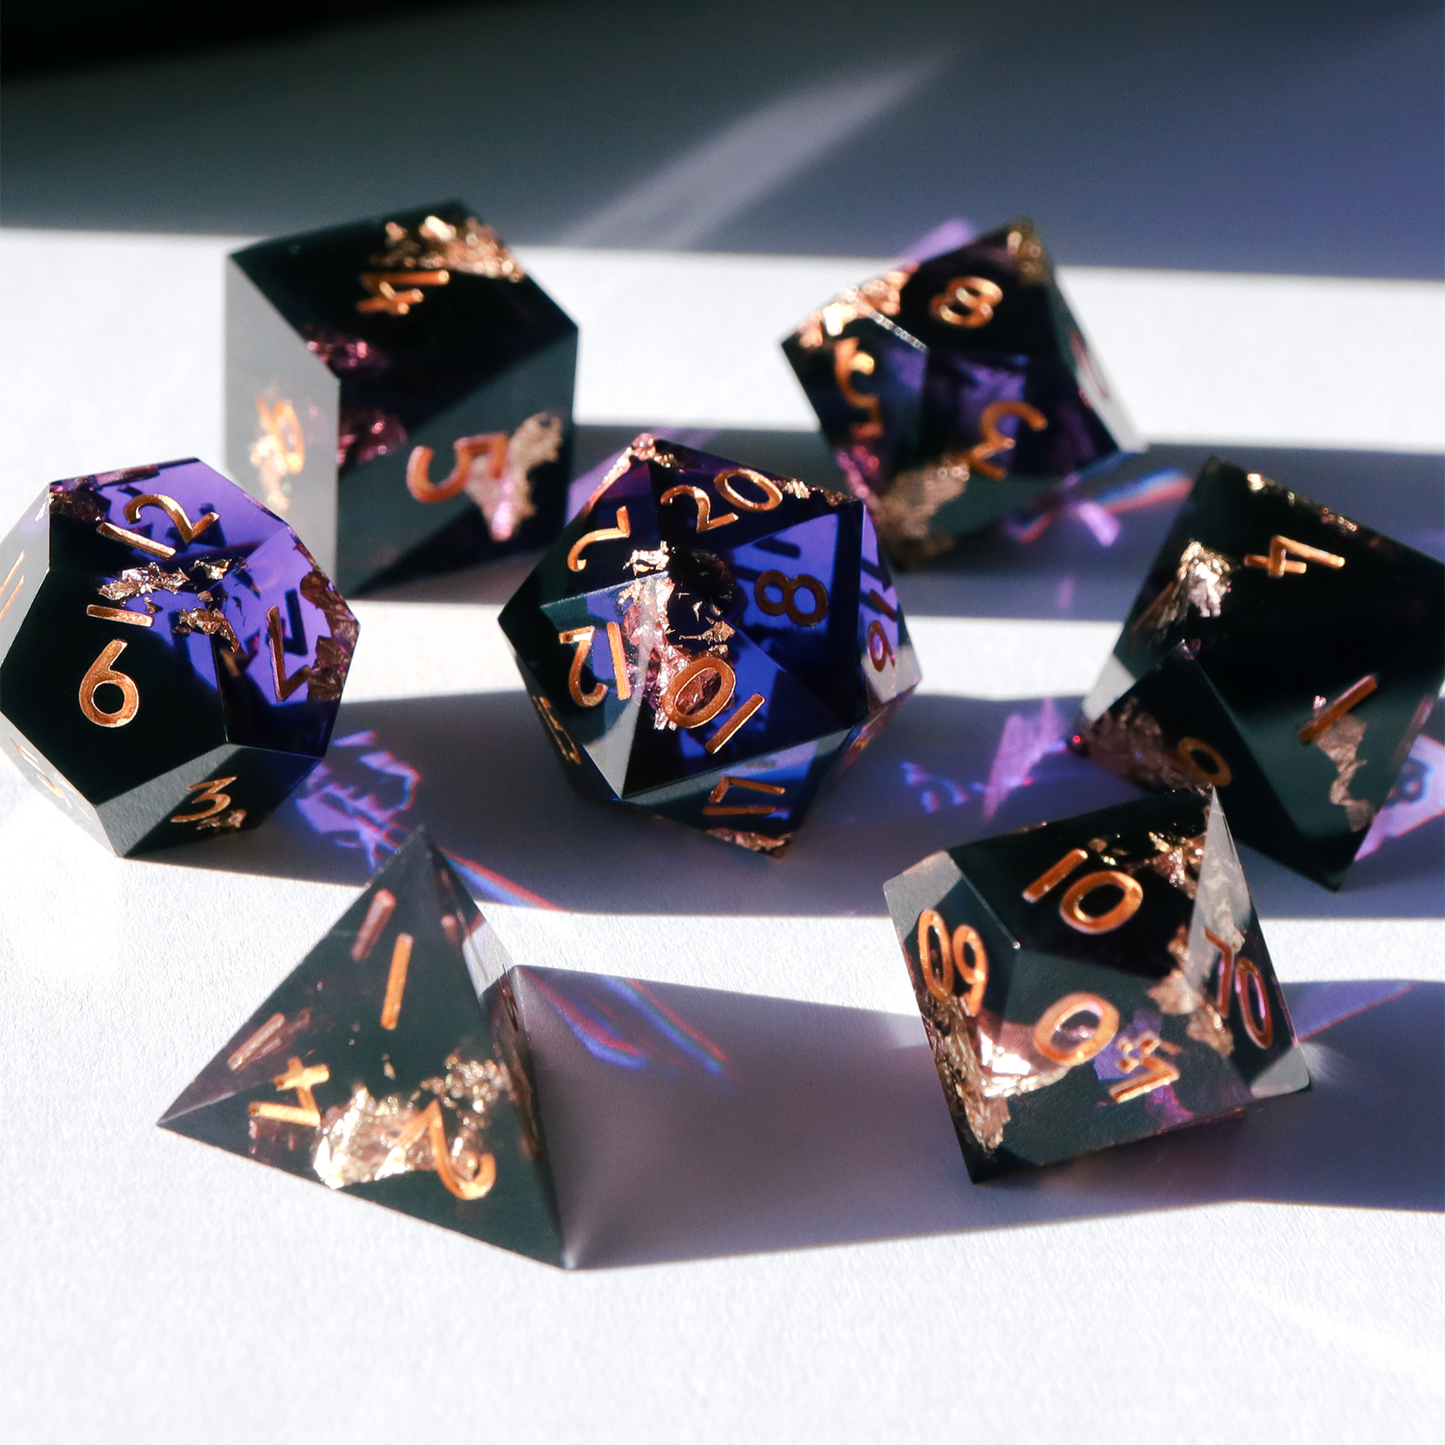 Heretic's Glory - handmade sharp edge 7 piece dice set